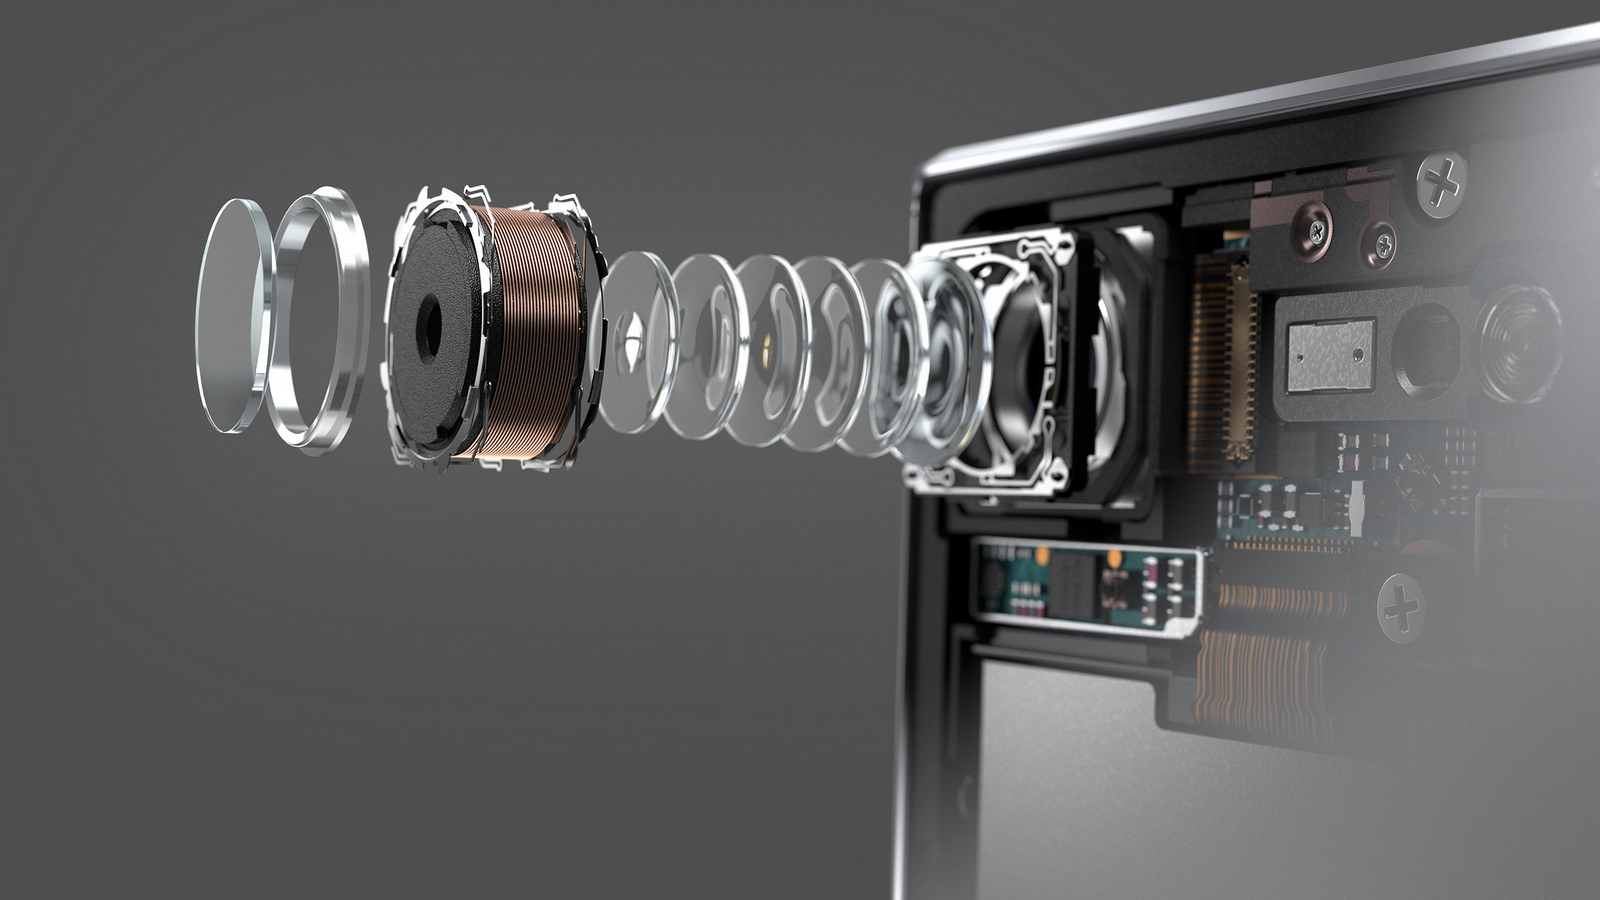 3D Cameras and Sensors Market Future Prospects 2025 | Intel, Arm, NVIDIA, CEVA